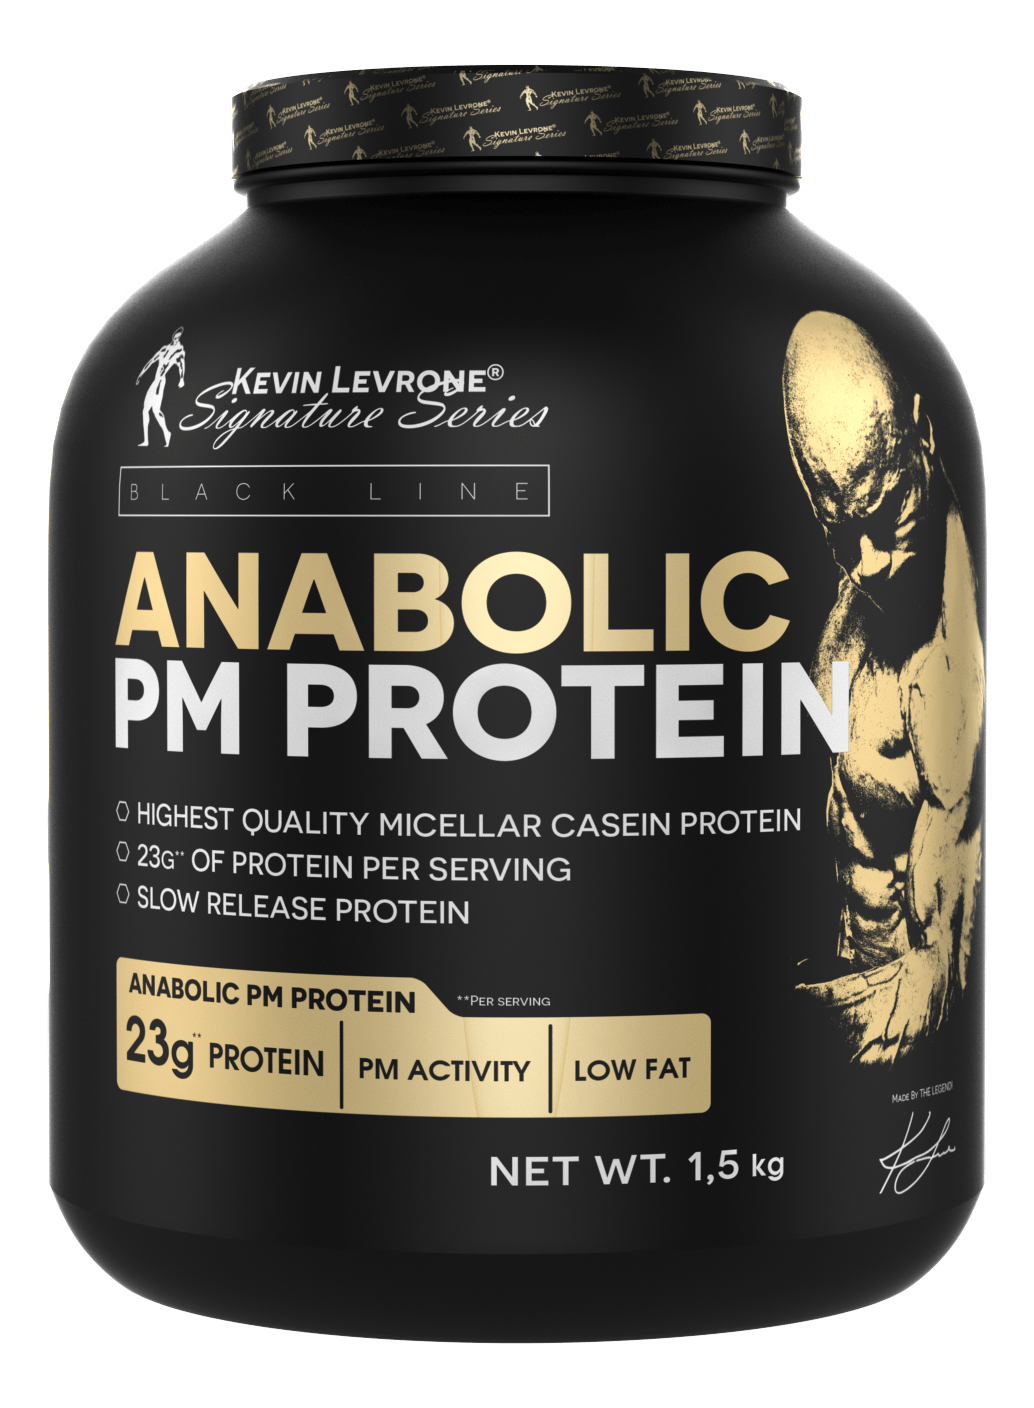 Kevin Levrone Протеин Kevin Levrone Anabolic PM Protein, 1.5 кг Ваниль СРОК 04.21, , 1500  грамм